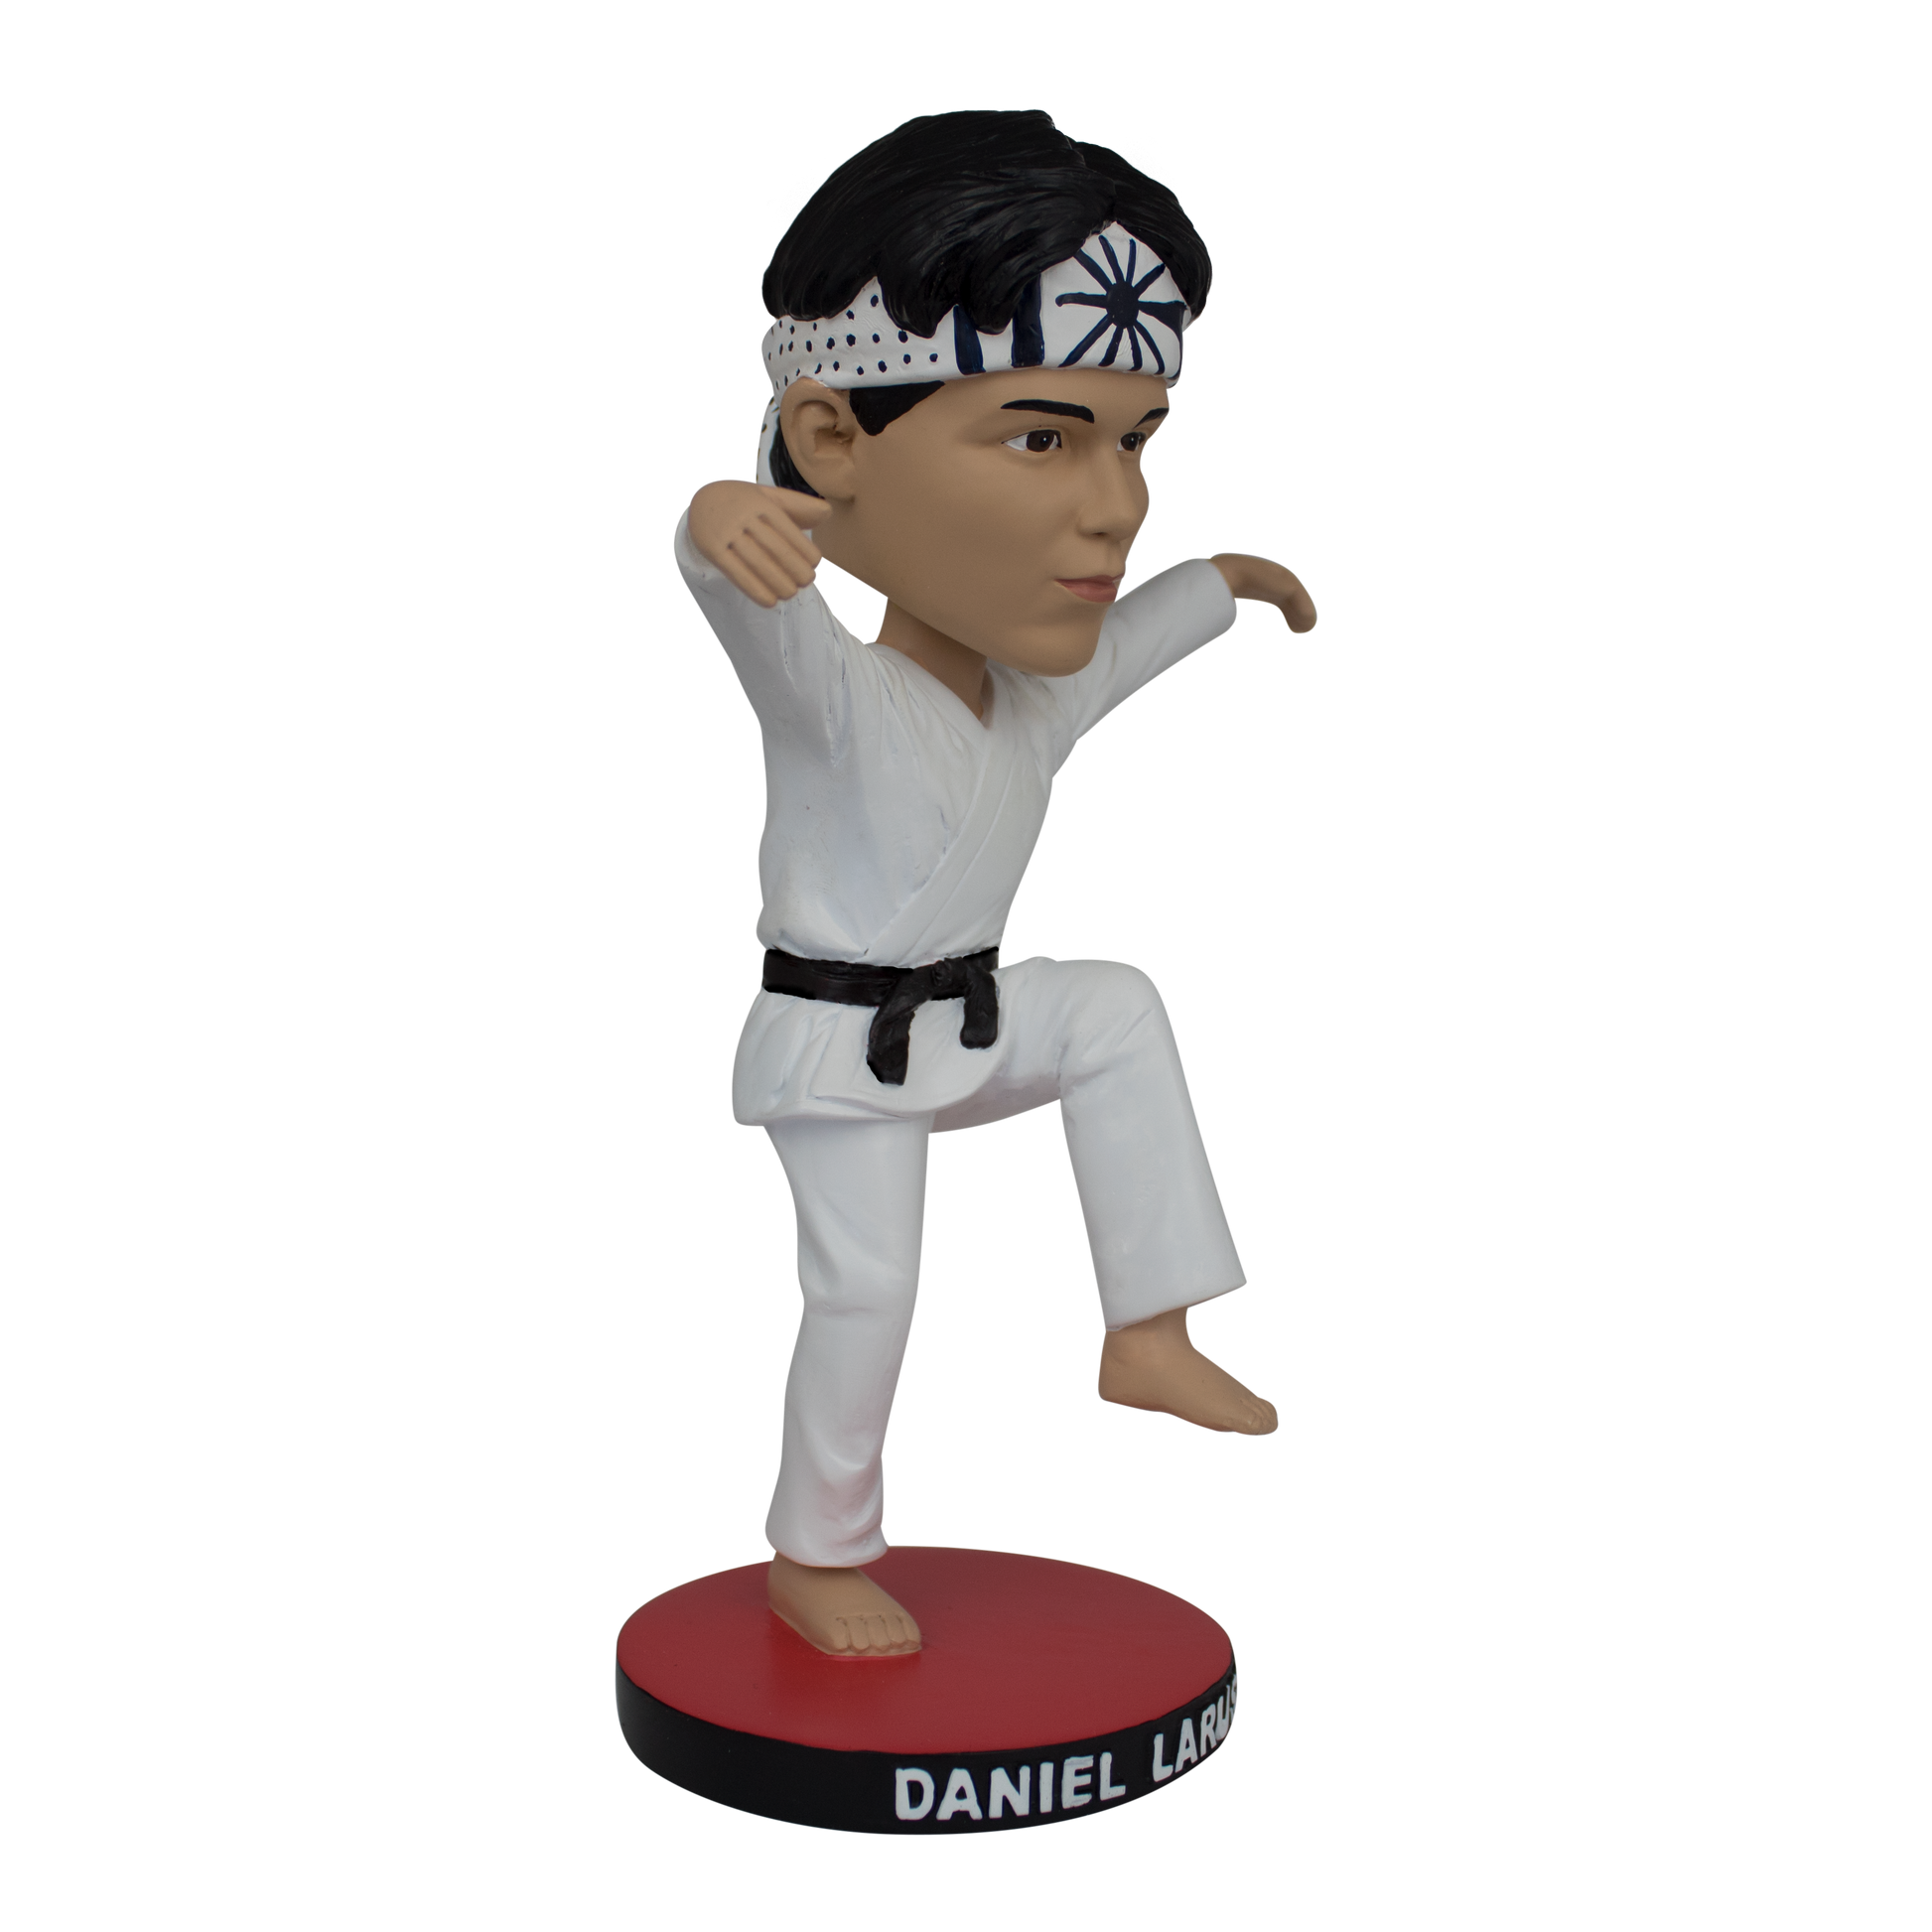 The Karate Kid Daniel Larusso Polystone Bobblehead - Icon Heroes 